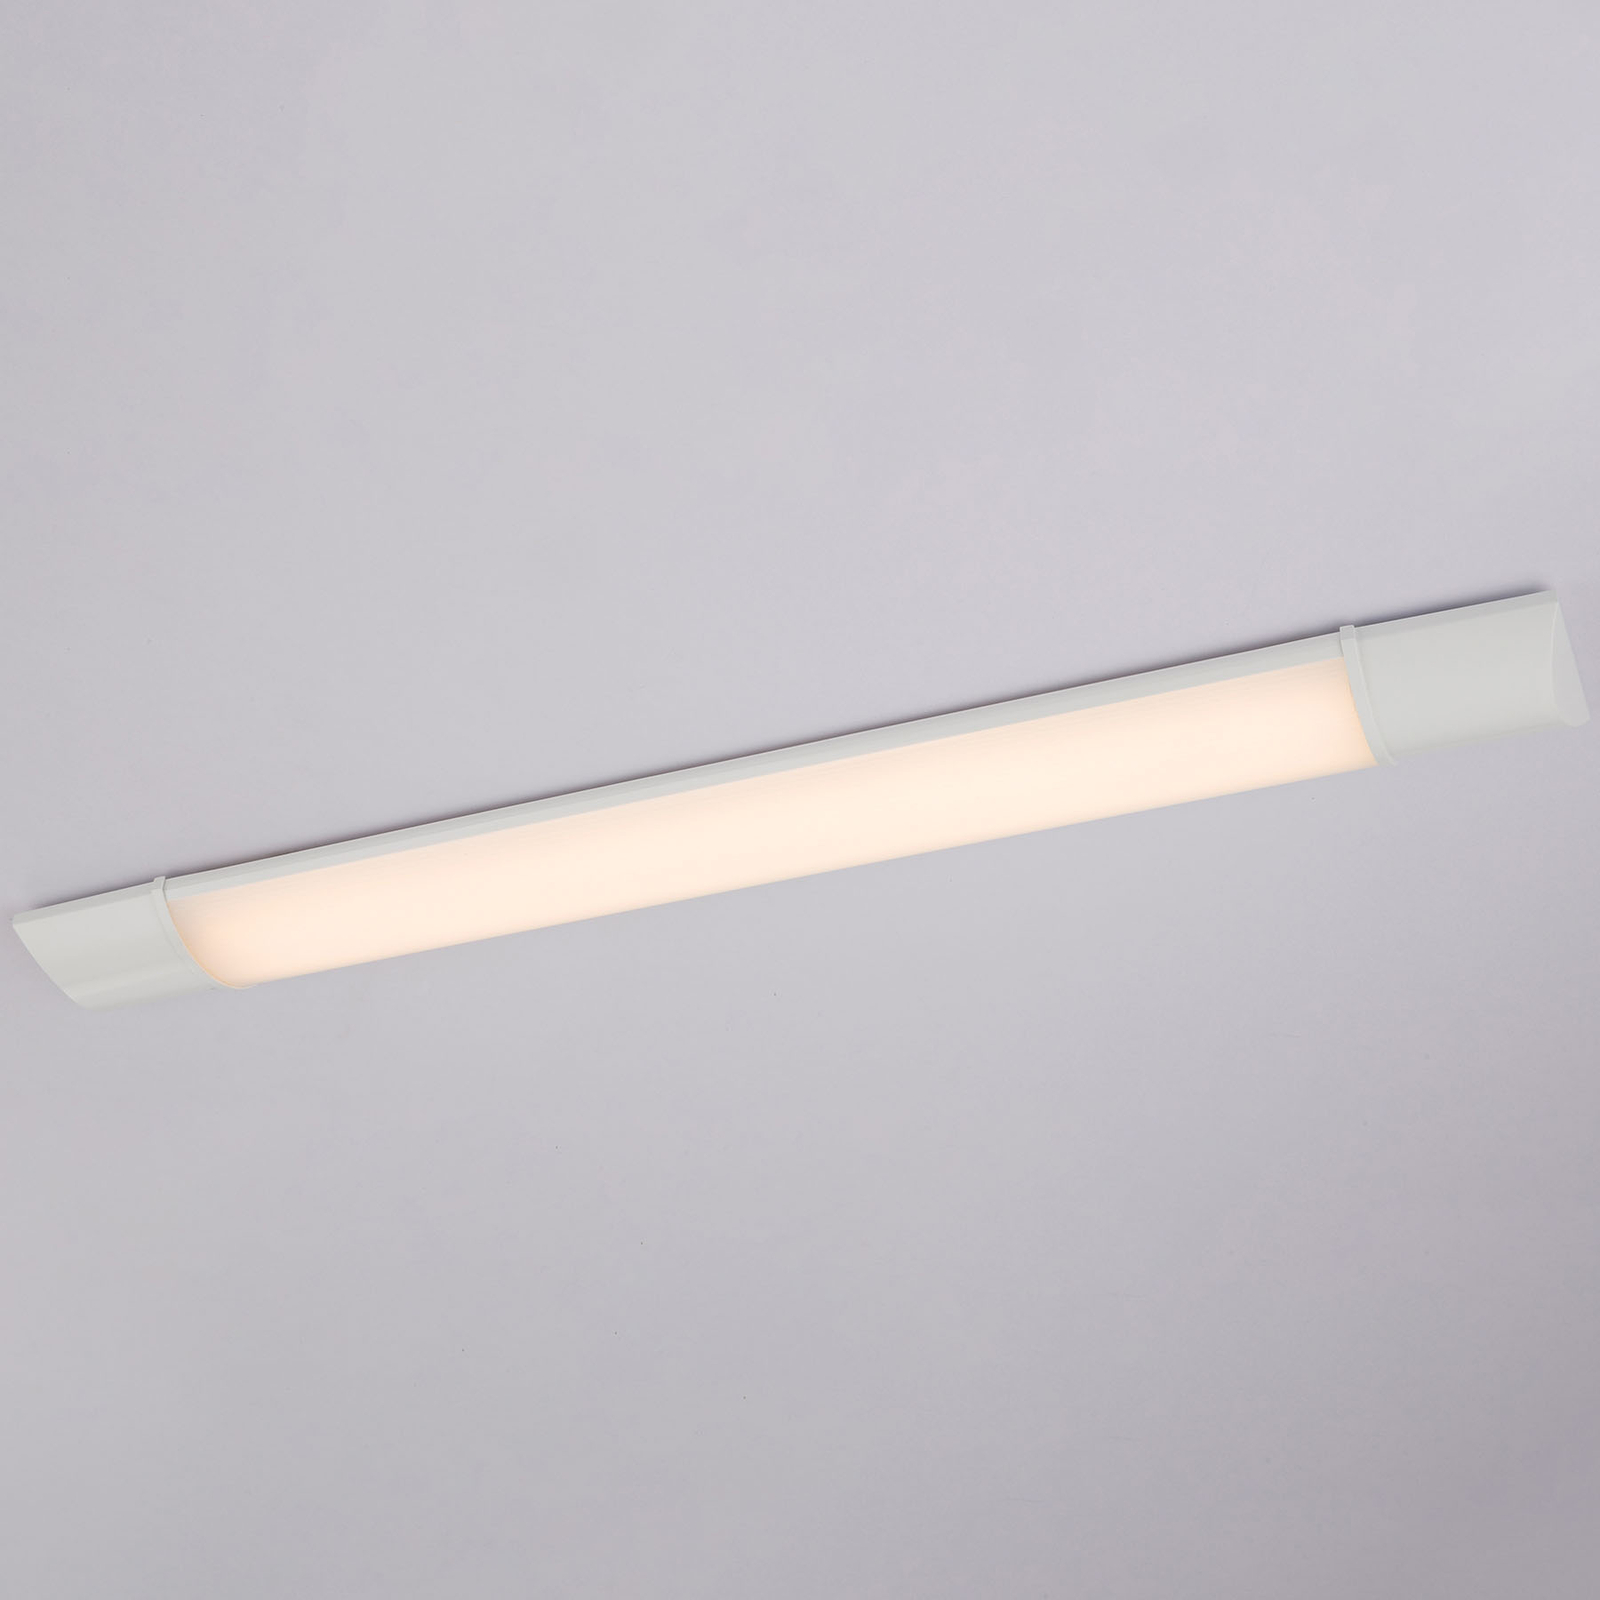 LED-underskabslampe Obara, IP20, 60 cm lang